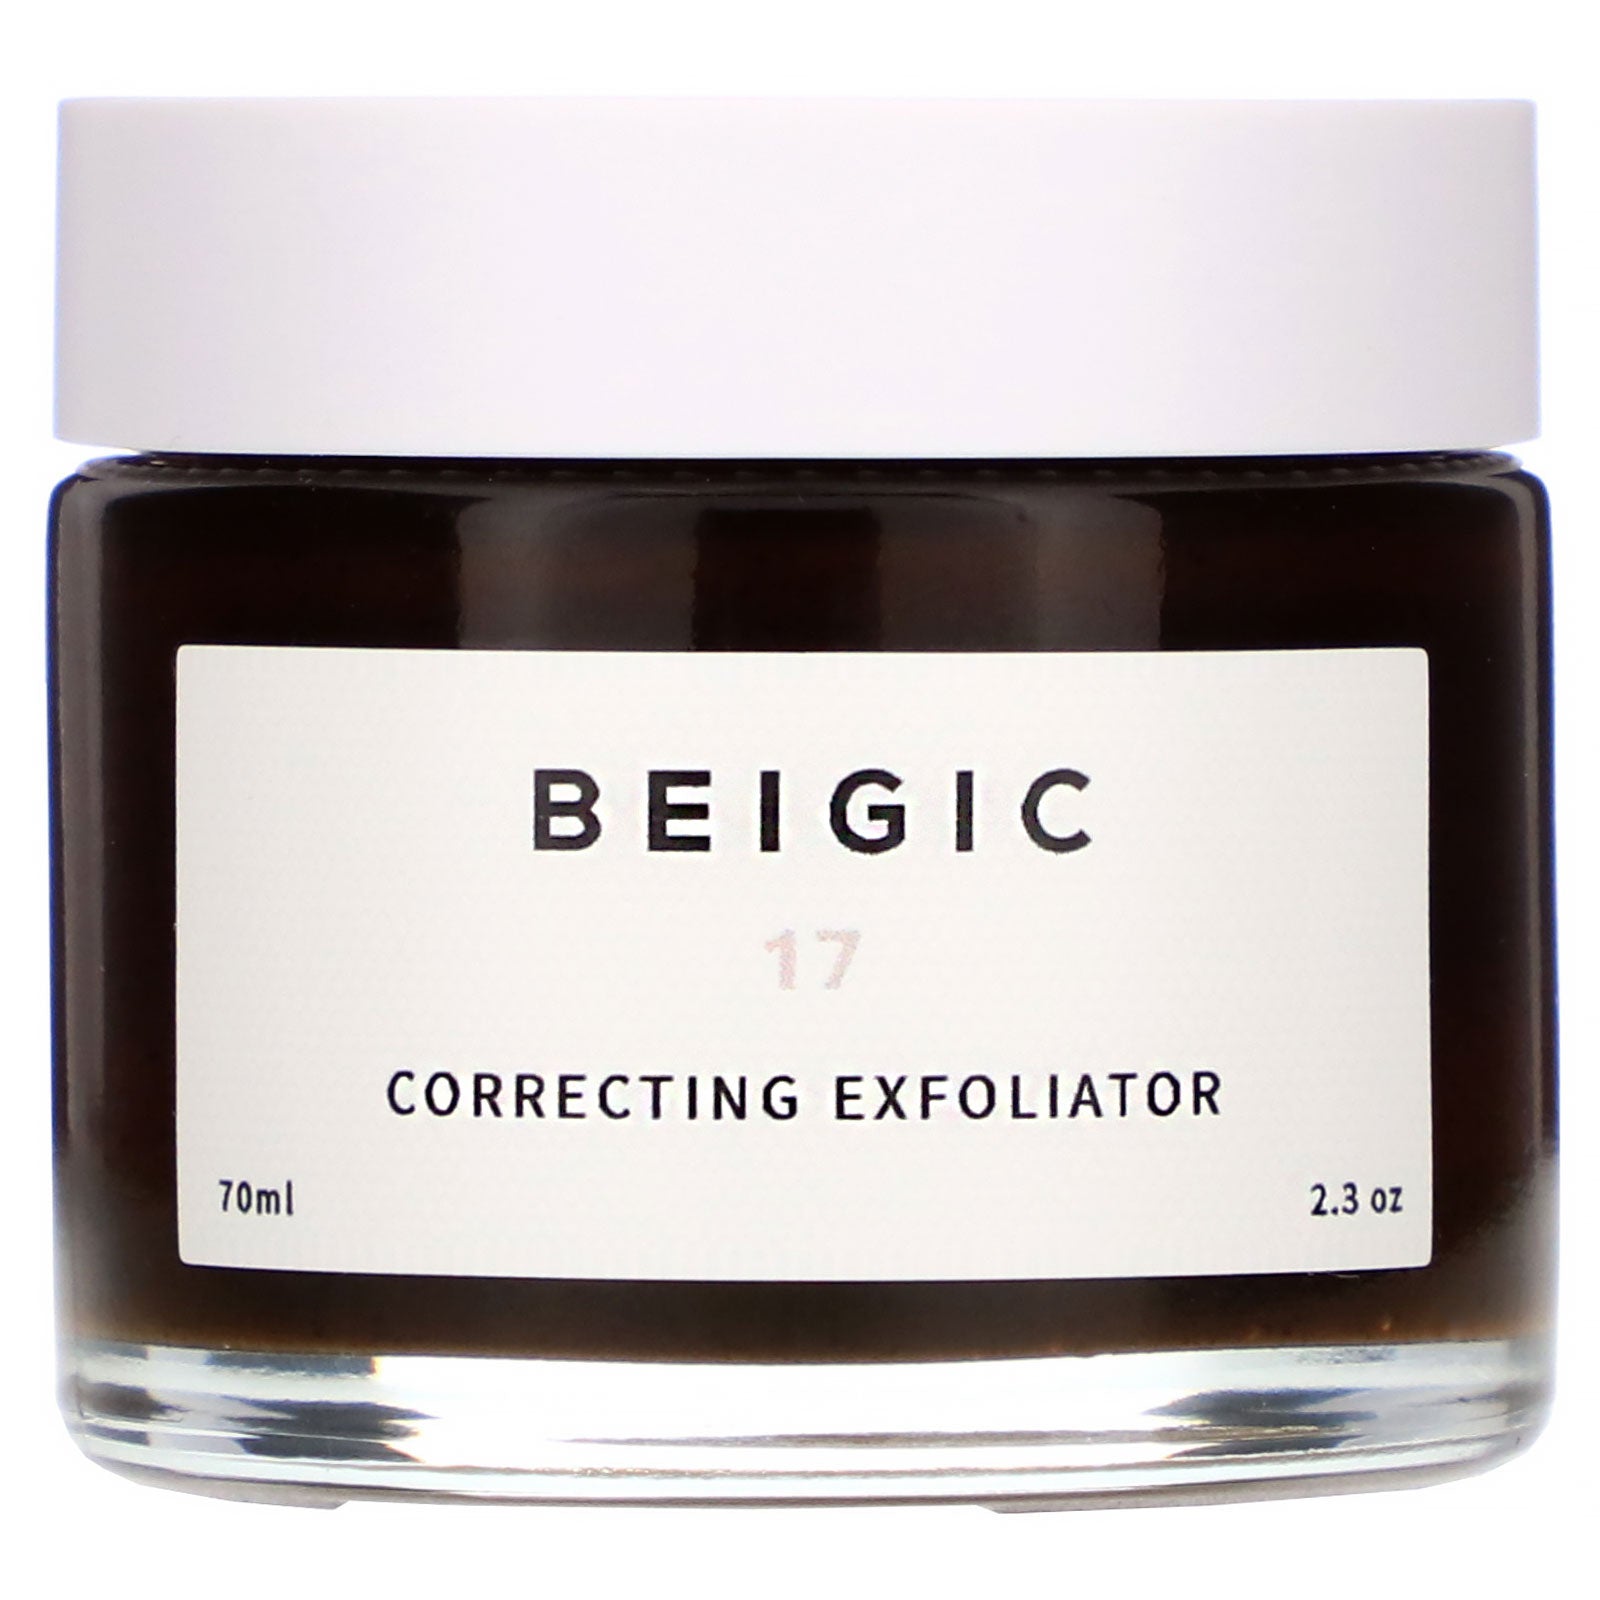 Beigic, Correcting Exfoliator, 2.3 oz (70 ml)